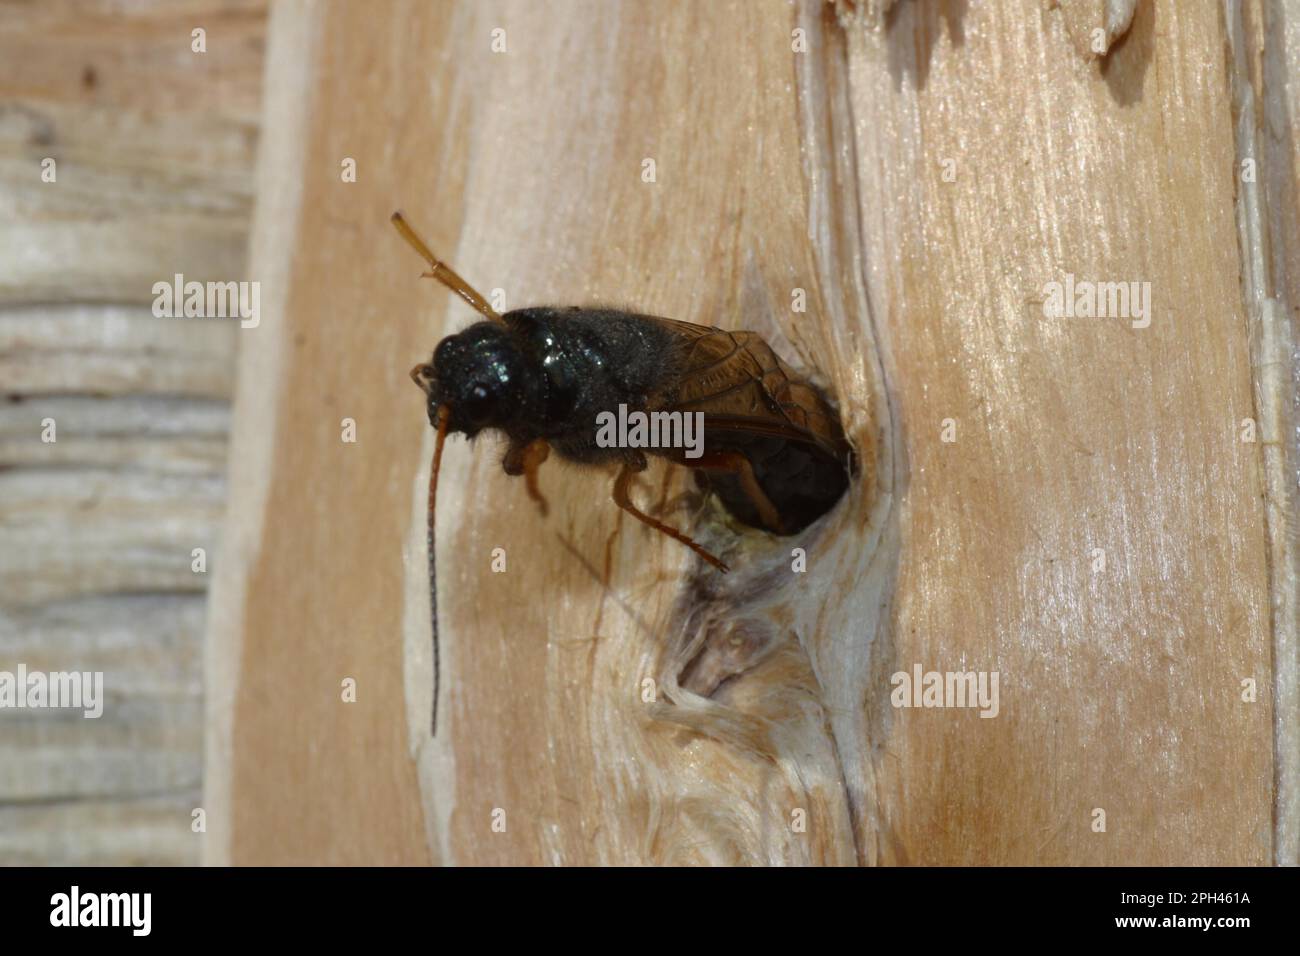 European wood wasp Stock Photo